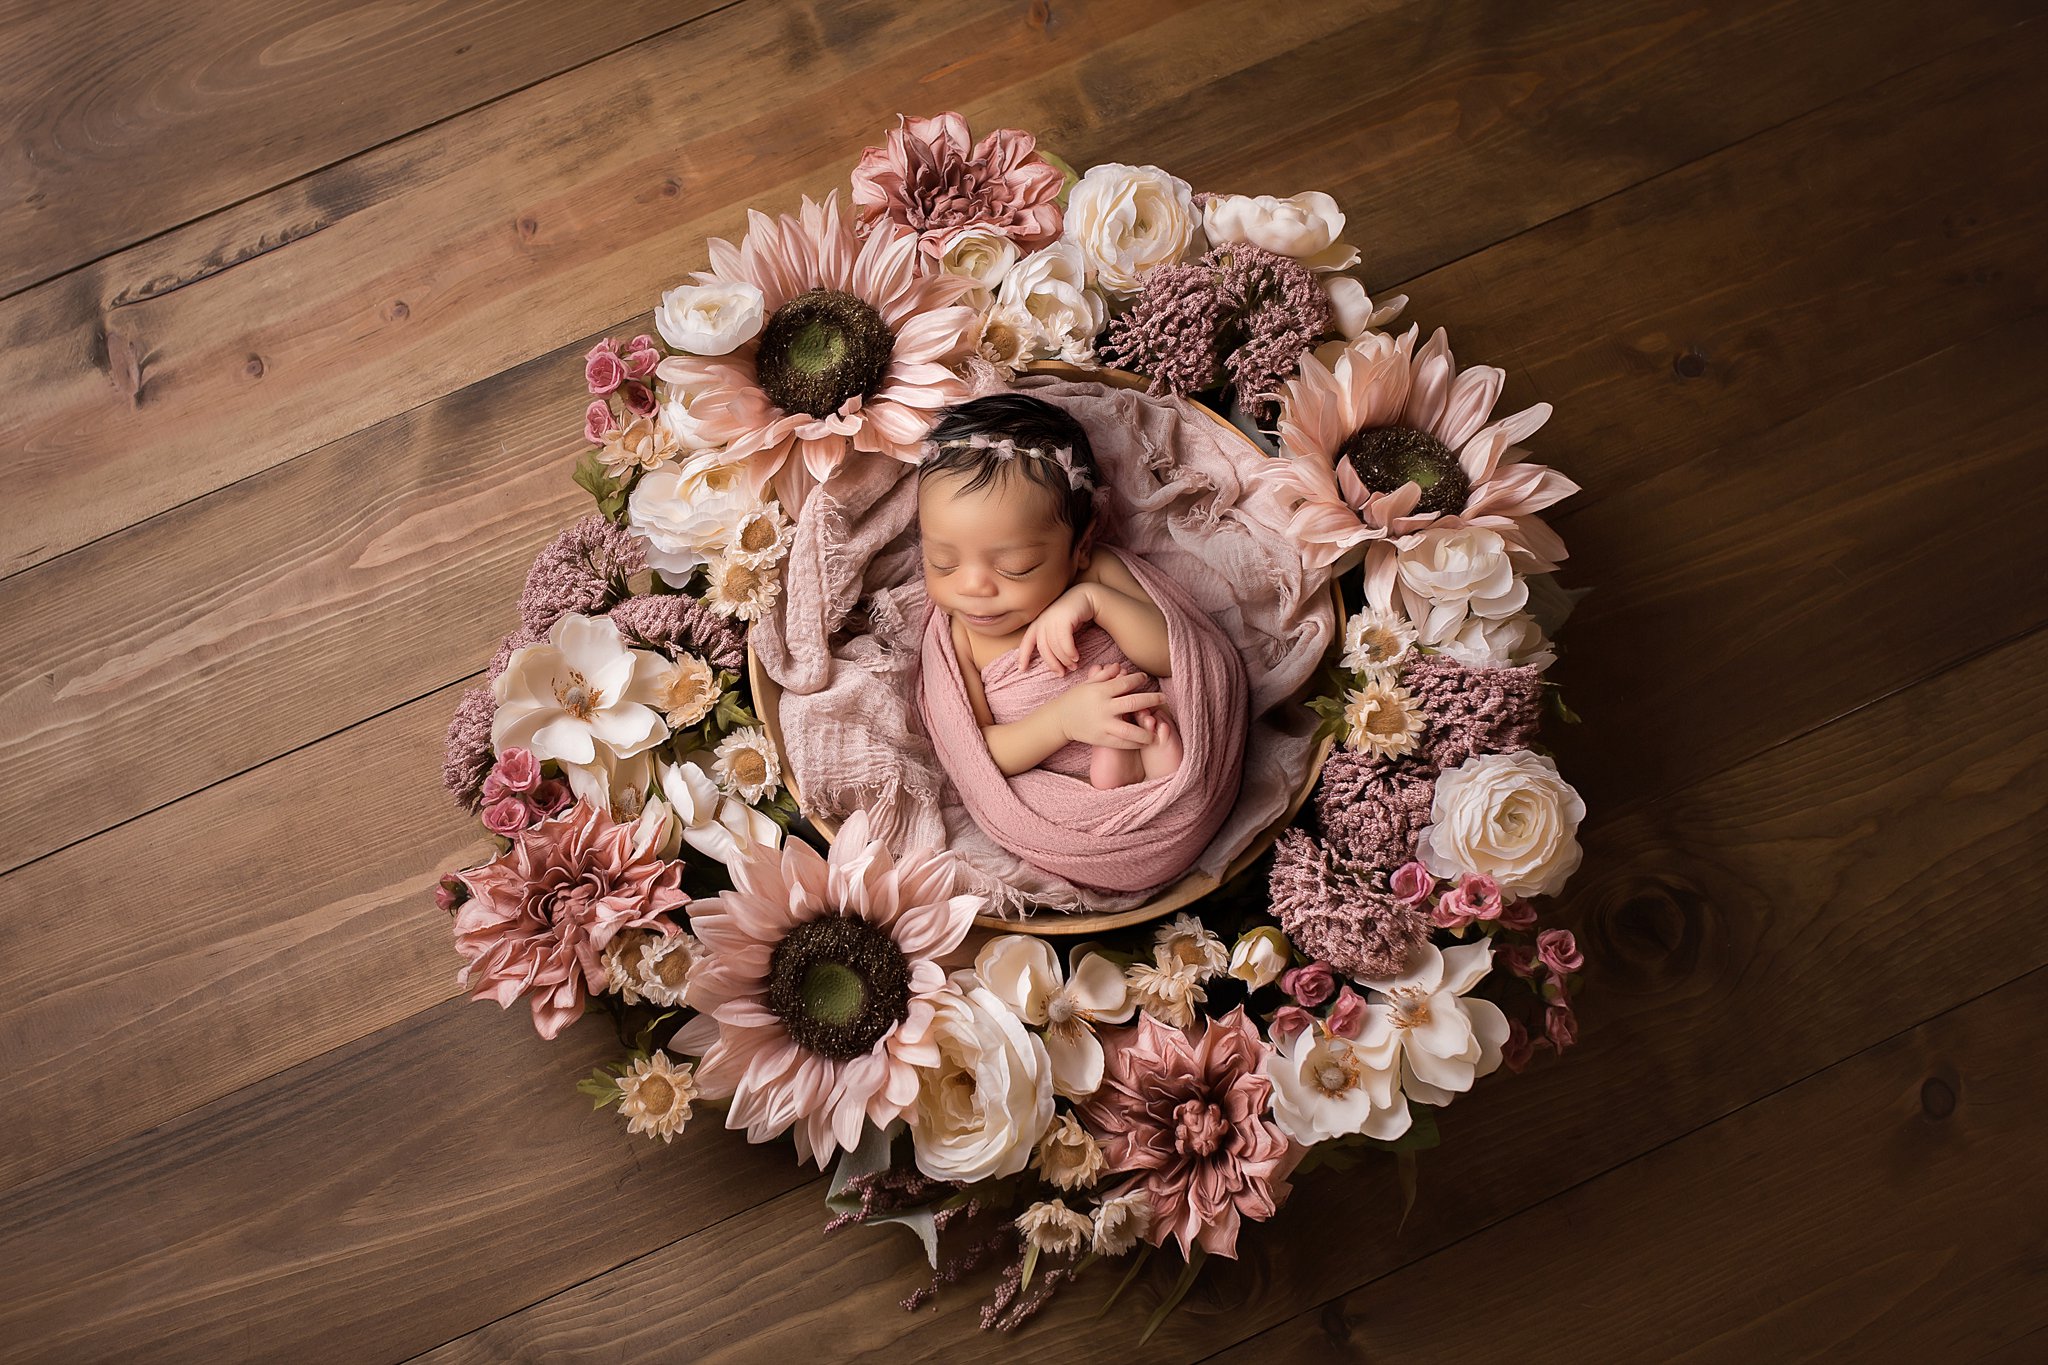 A sleeping newborn baby lays in a wooden bucket in a wreath of flowers